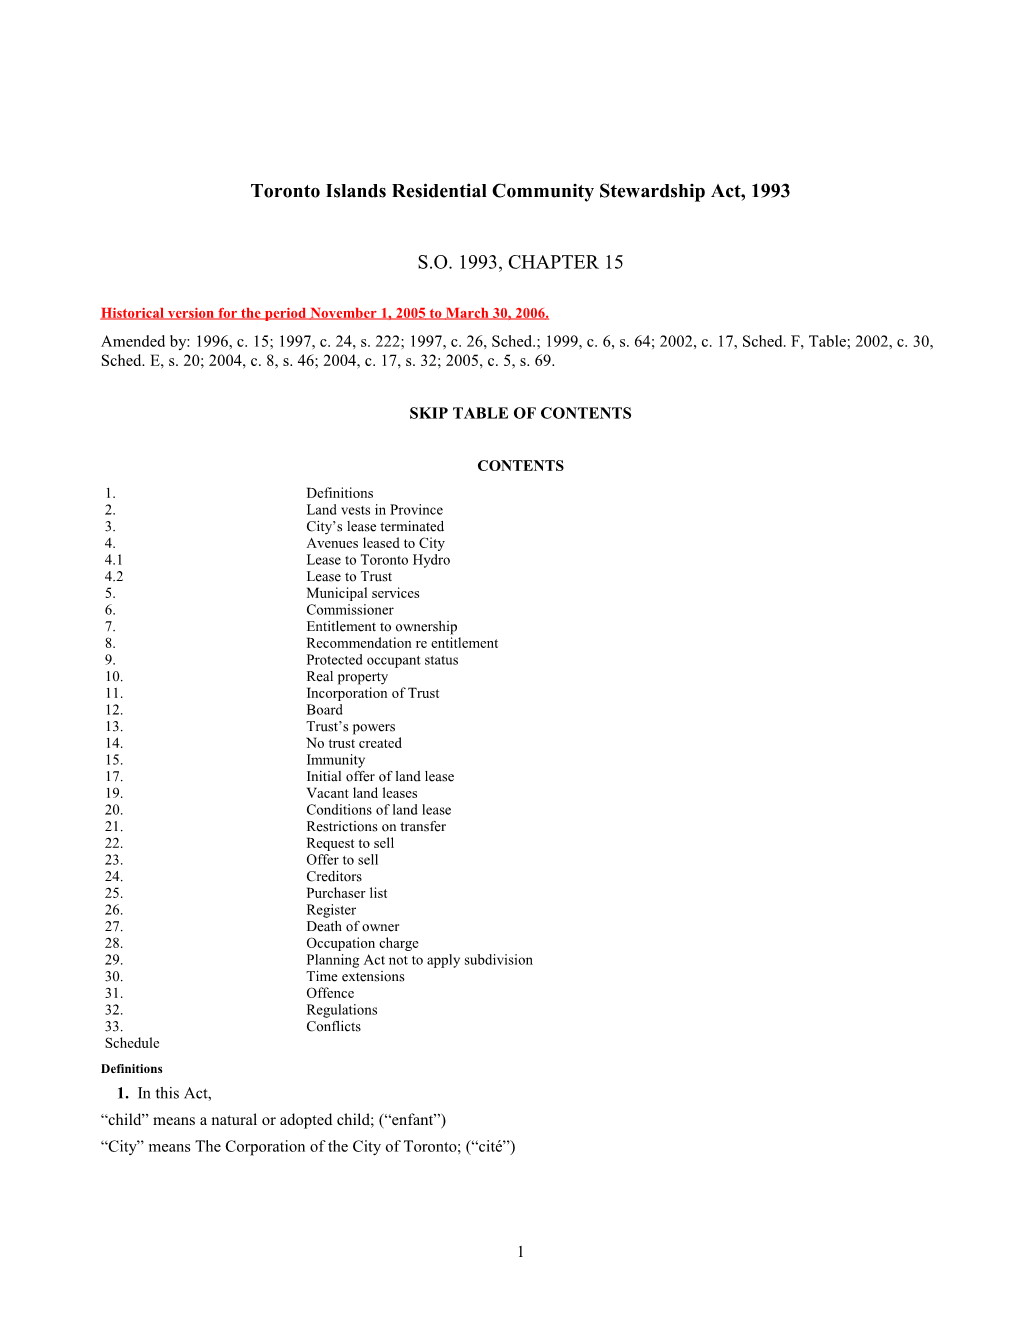 Toronto Islands Residential Community Stewardship Act, 1993, S.O. 1993, C. 15